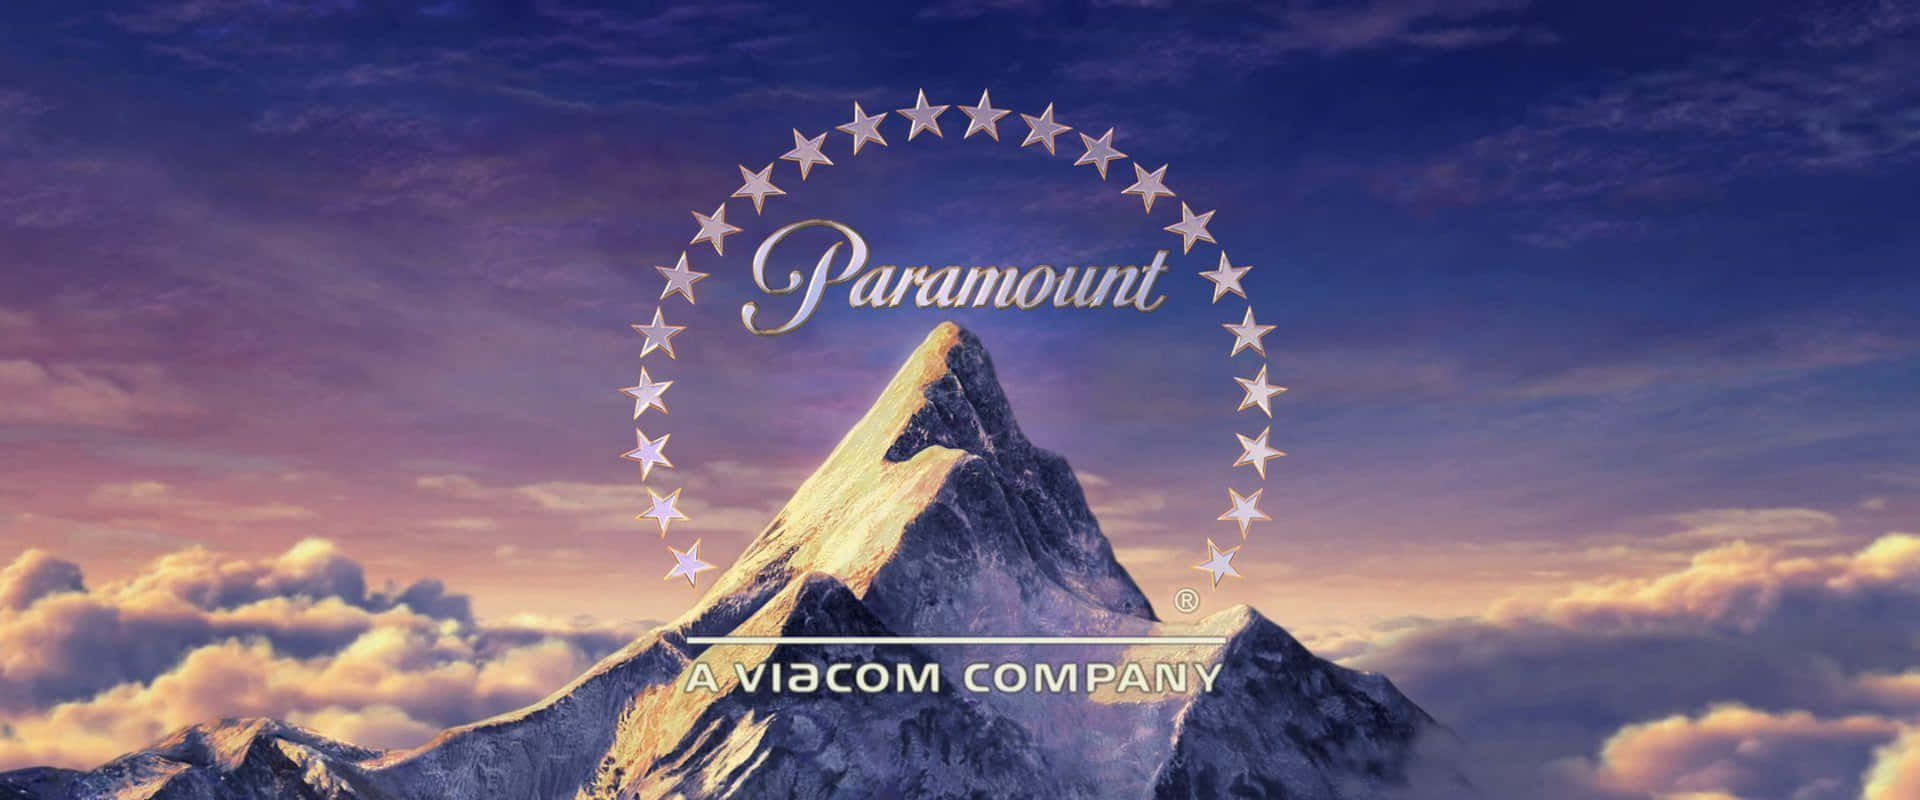 Paramount Bild